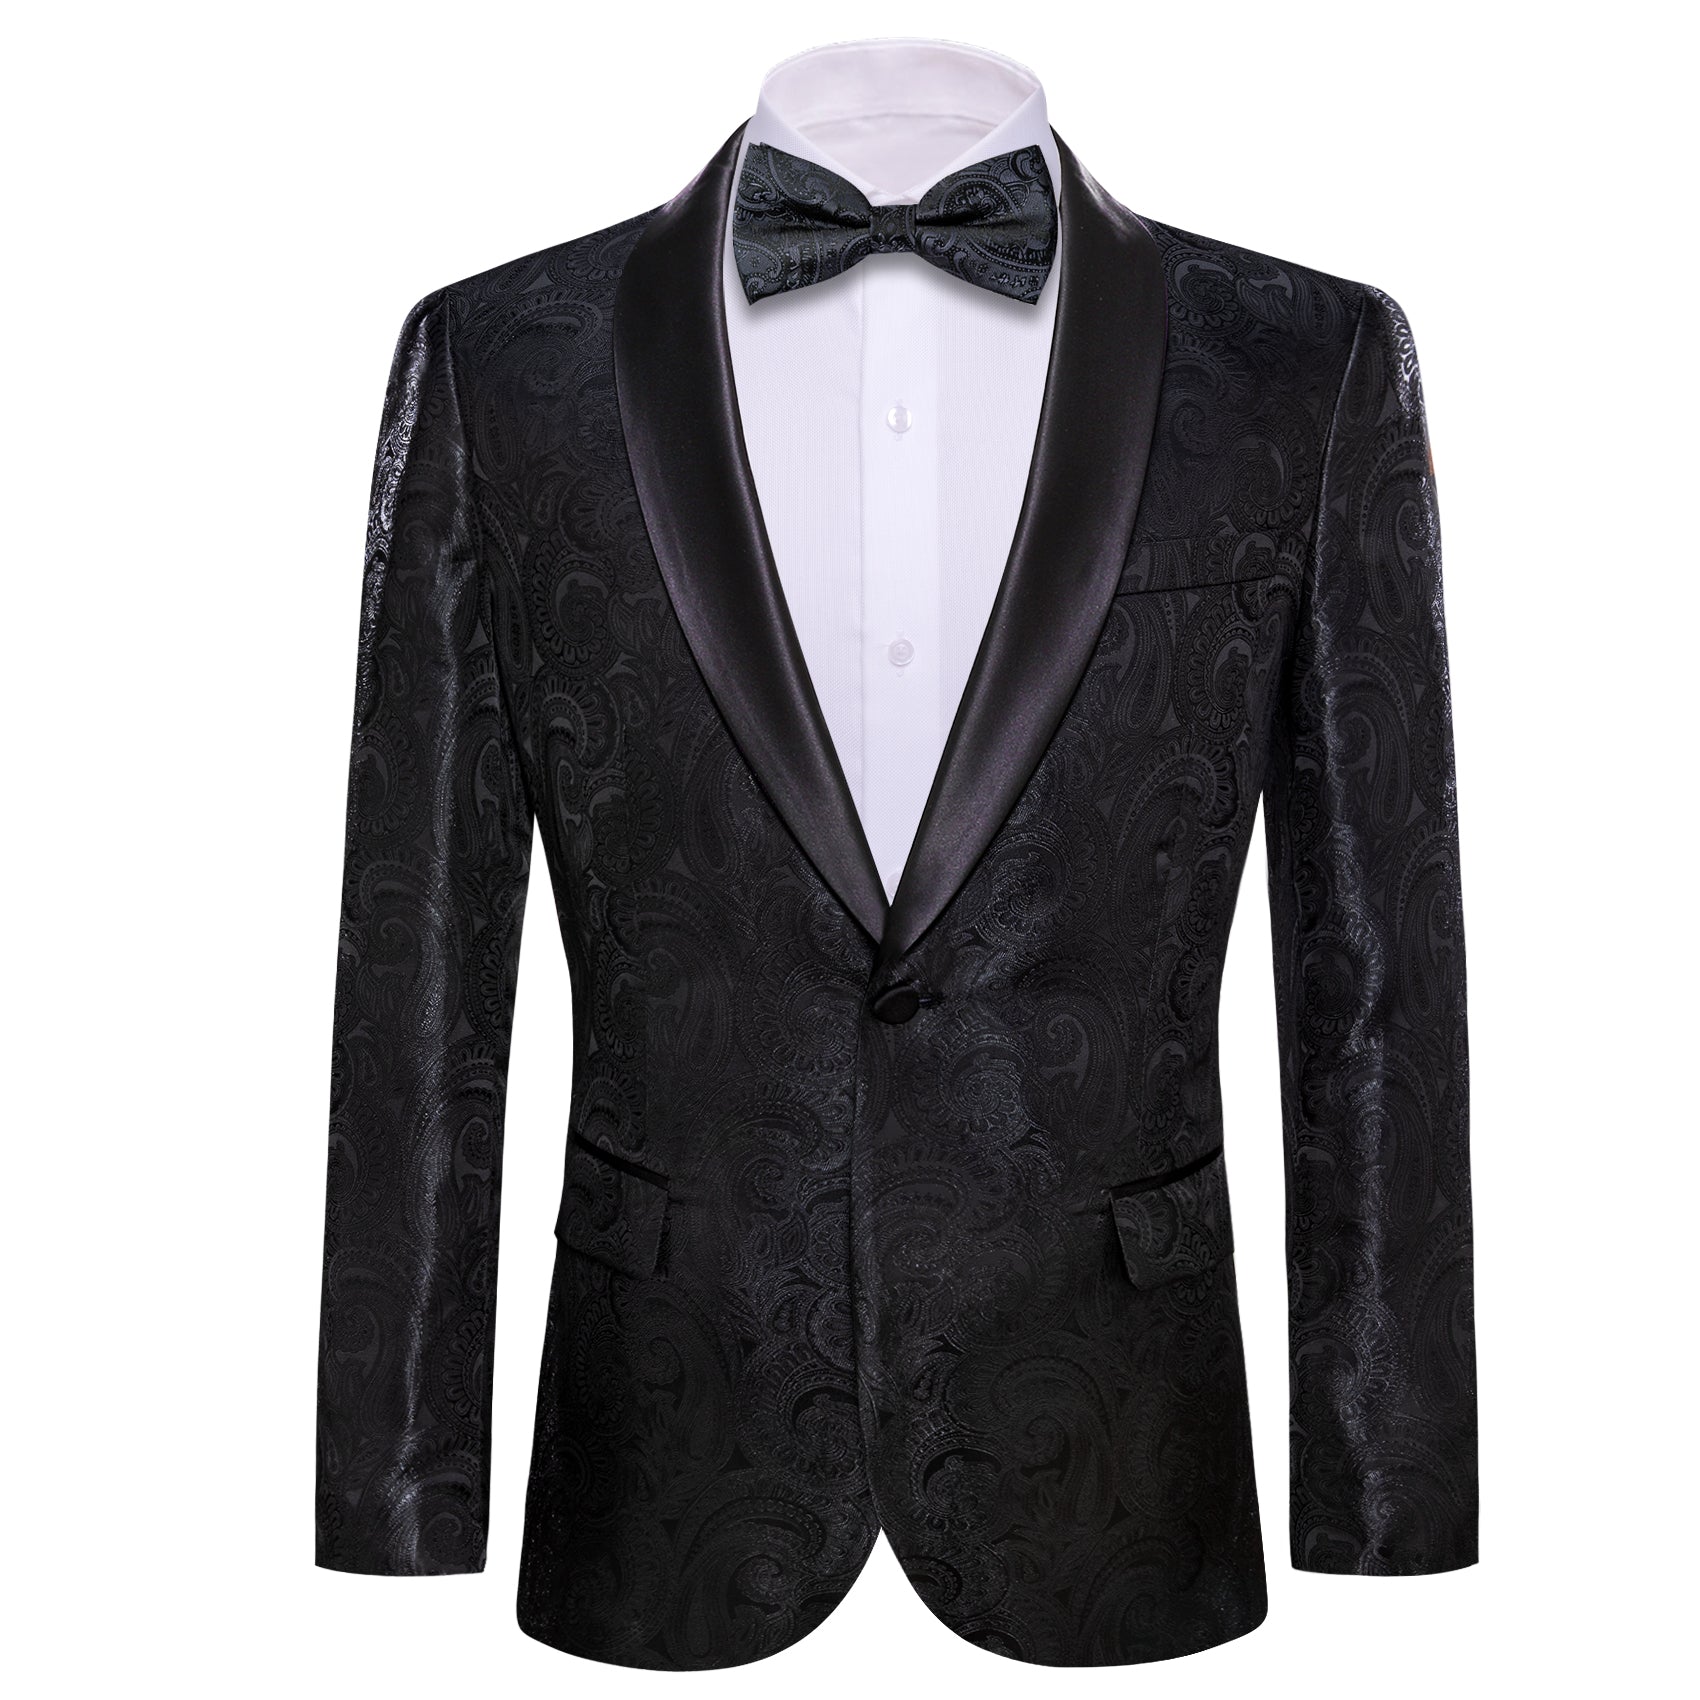 Barry Wang Wedding Suit Black Paisley Jacquard Blazer with Bowtie